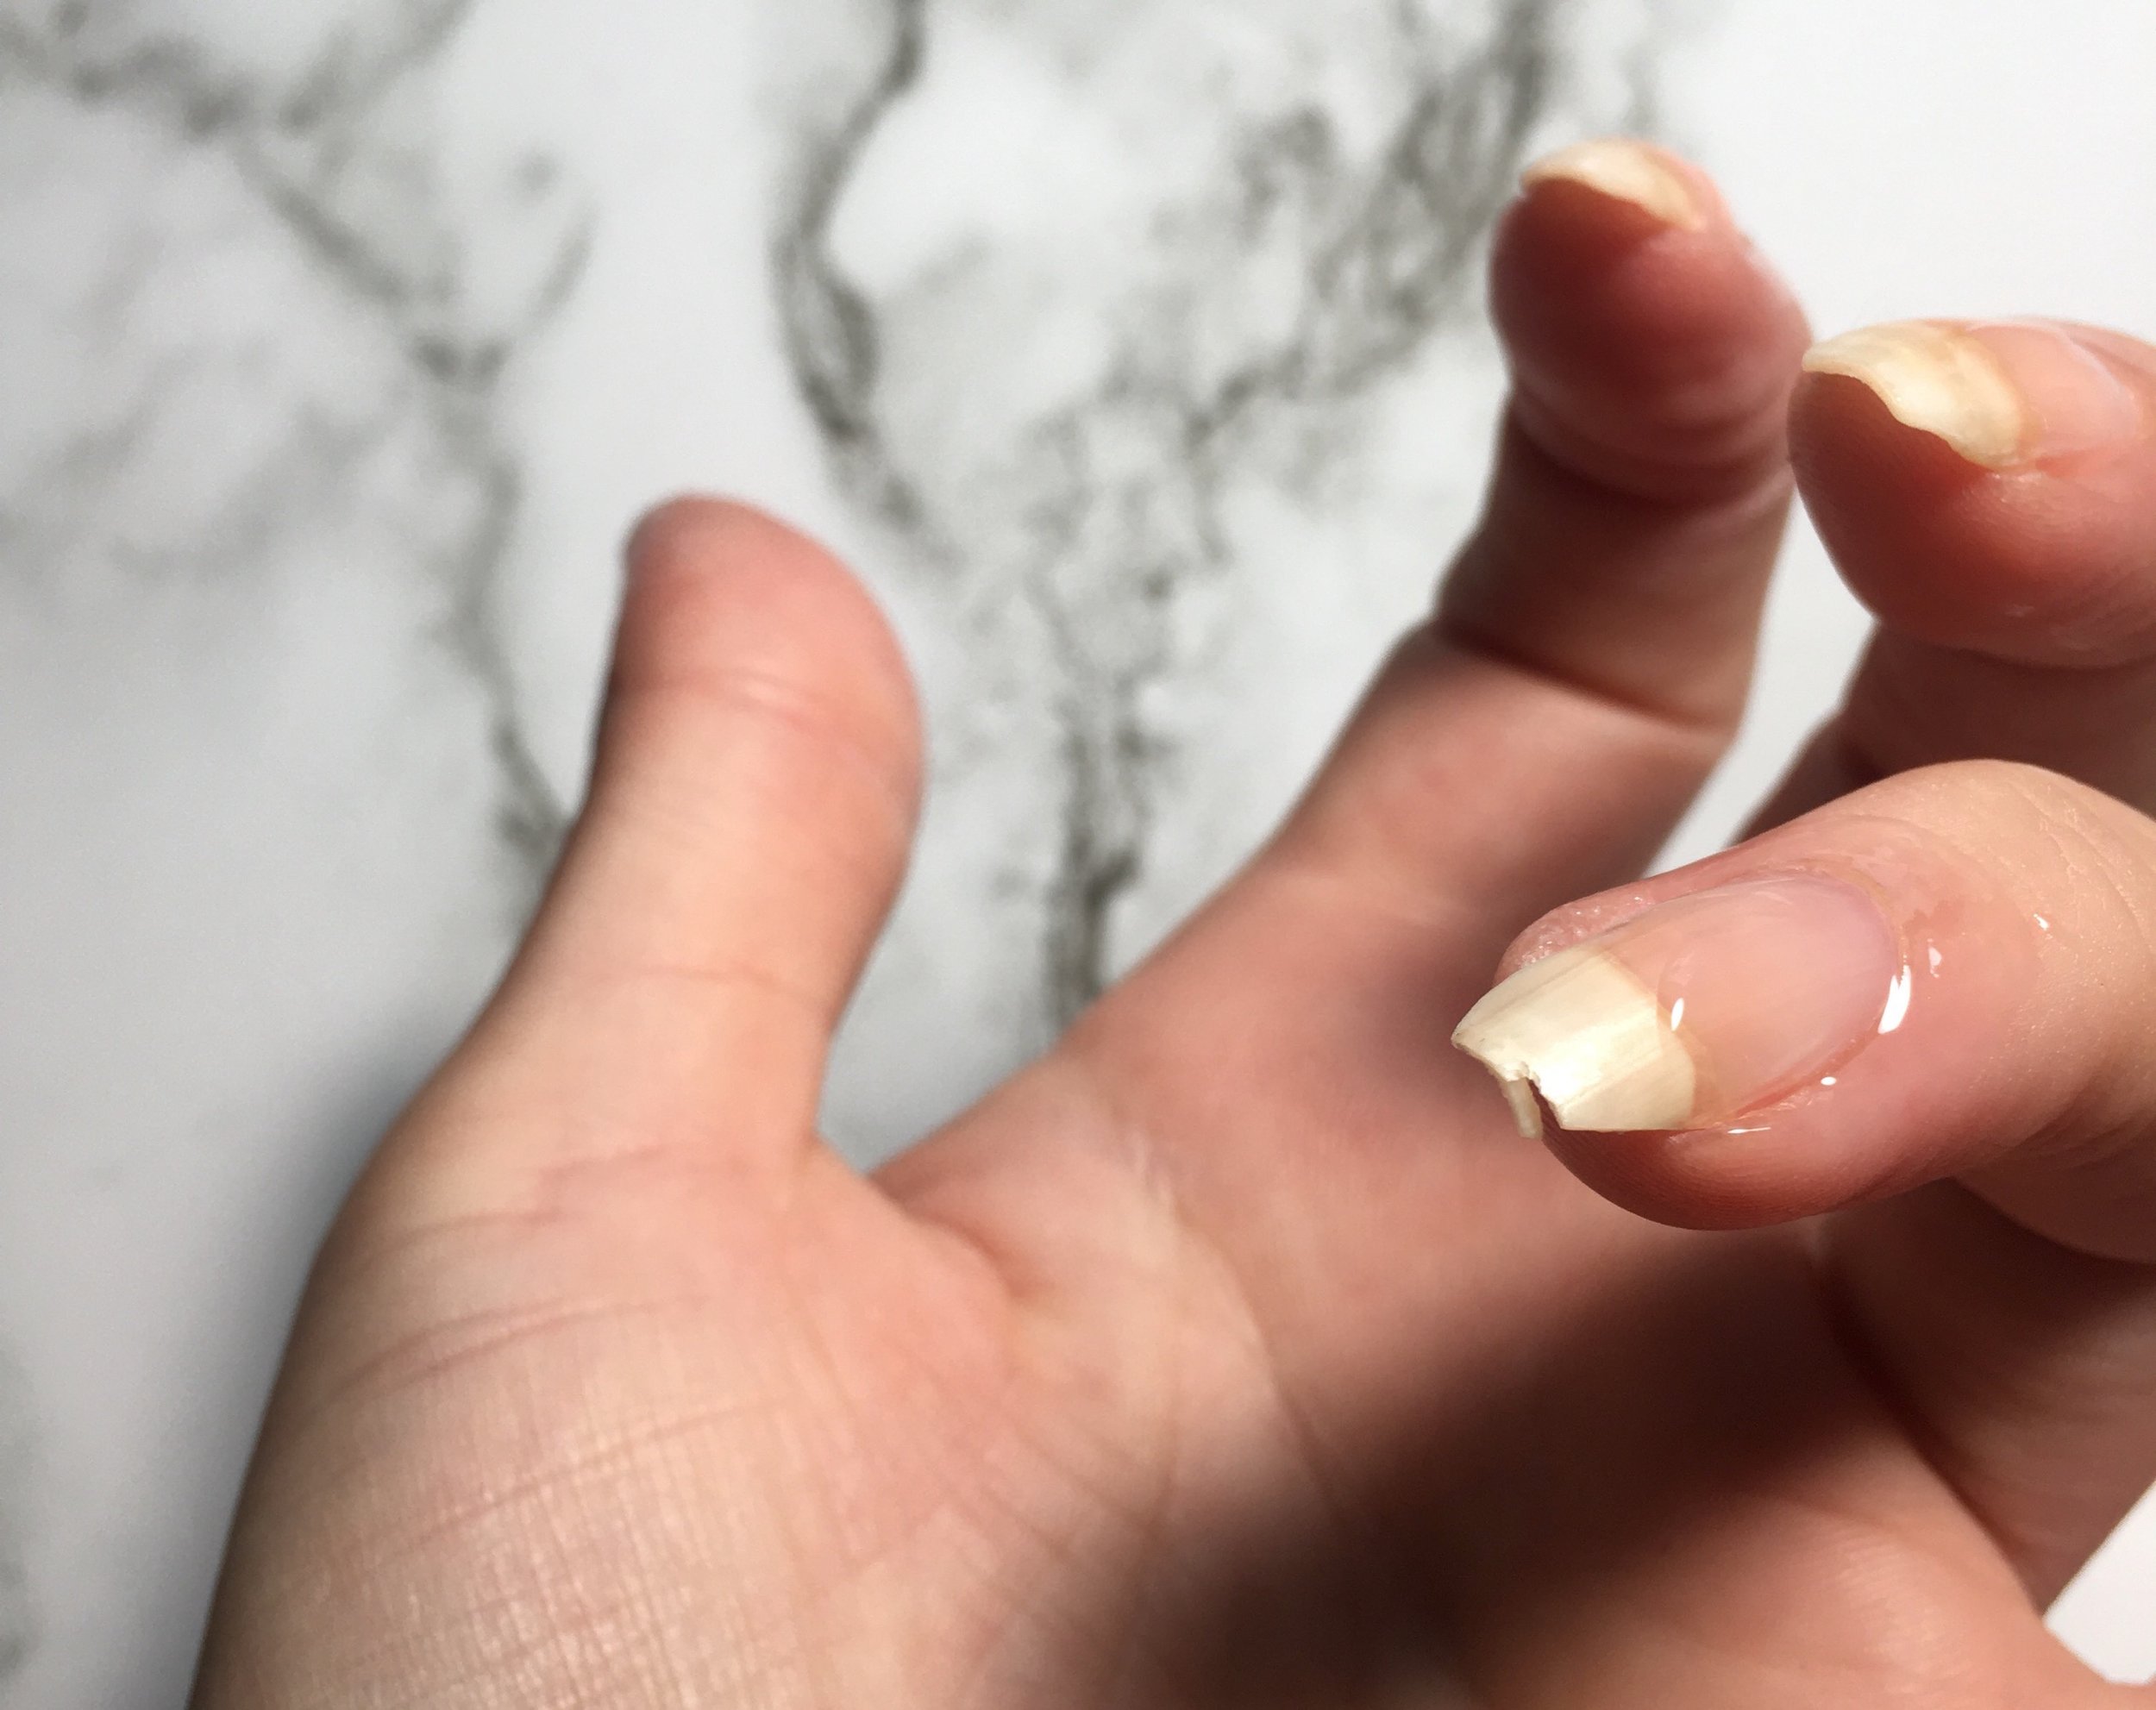 How to Fix a Broken Nail: 3 Ways to Improve Nail Health